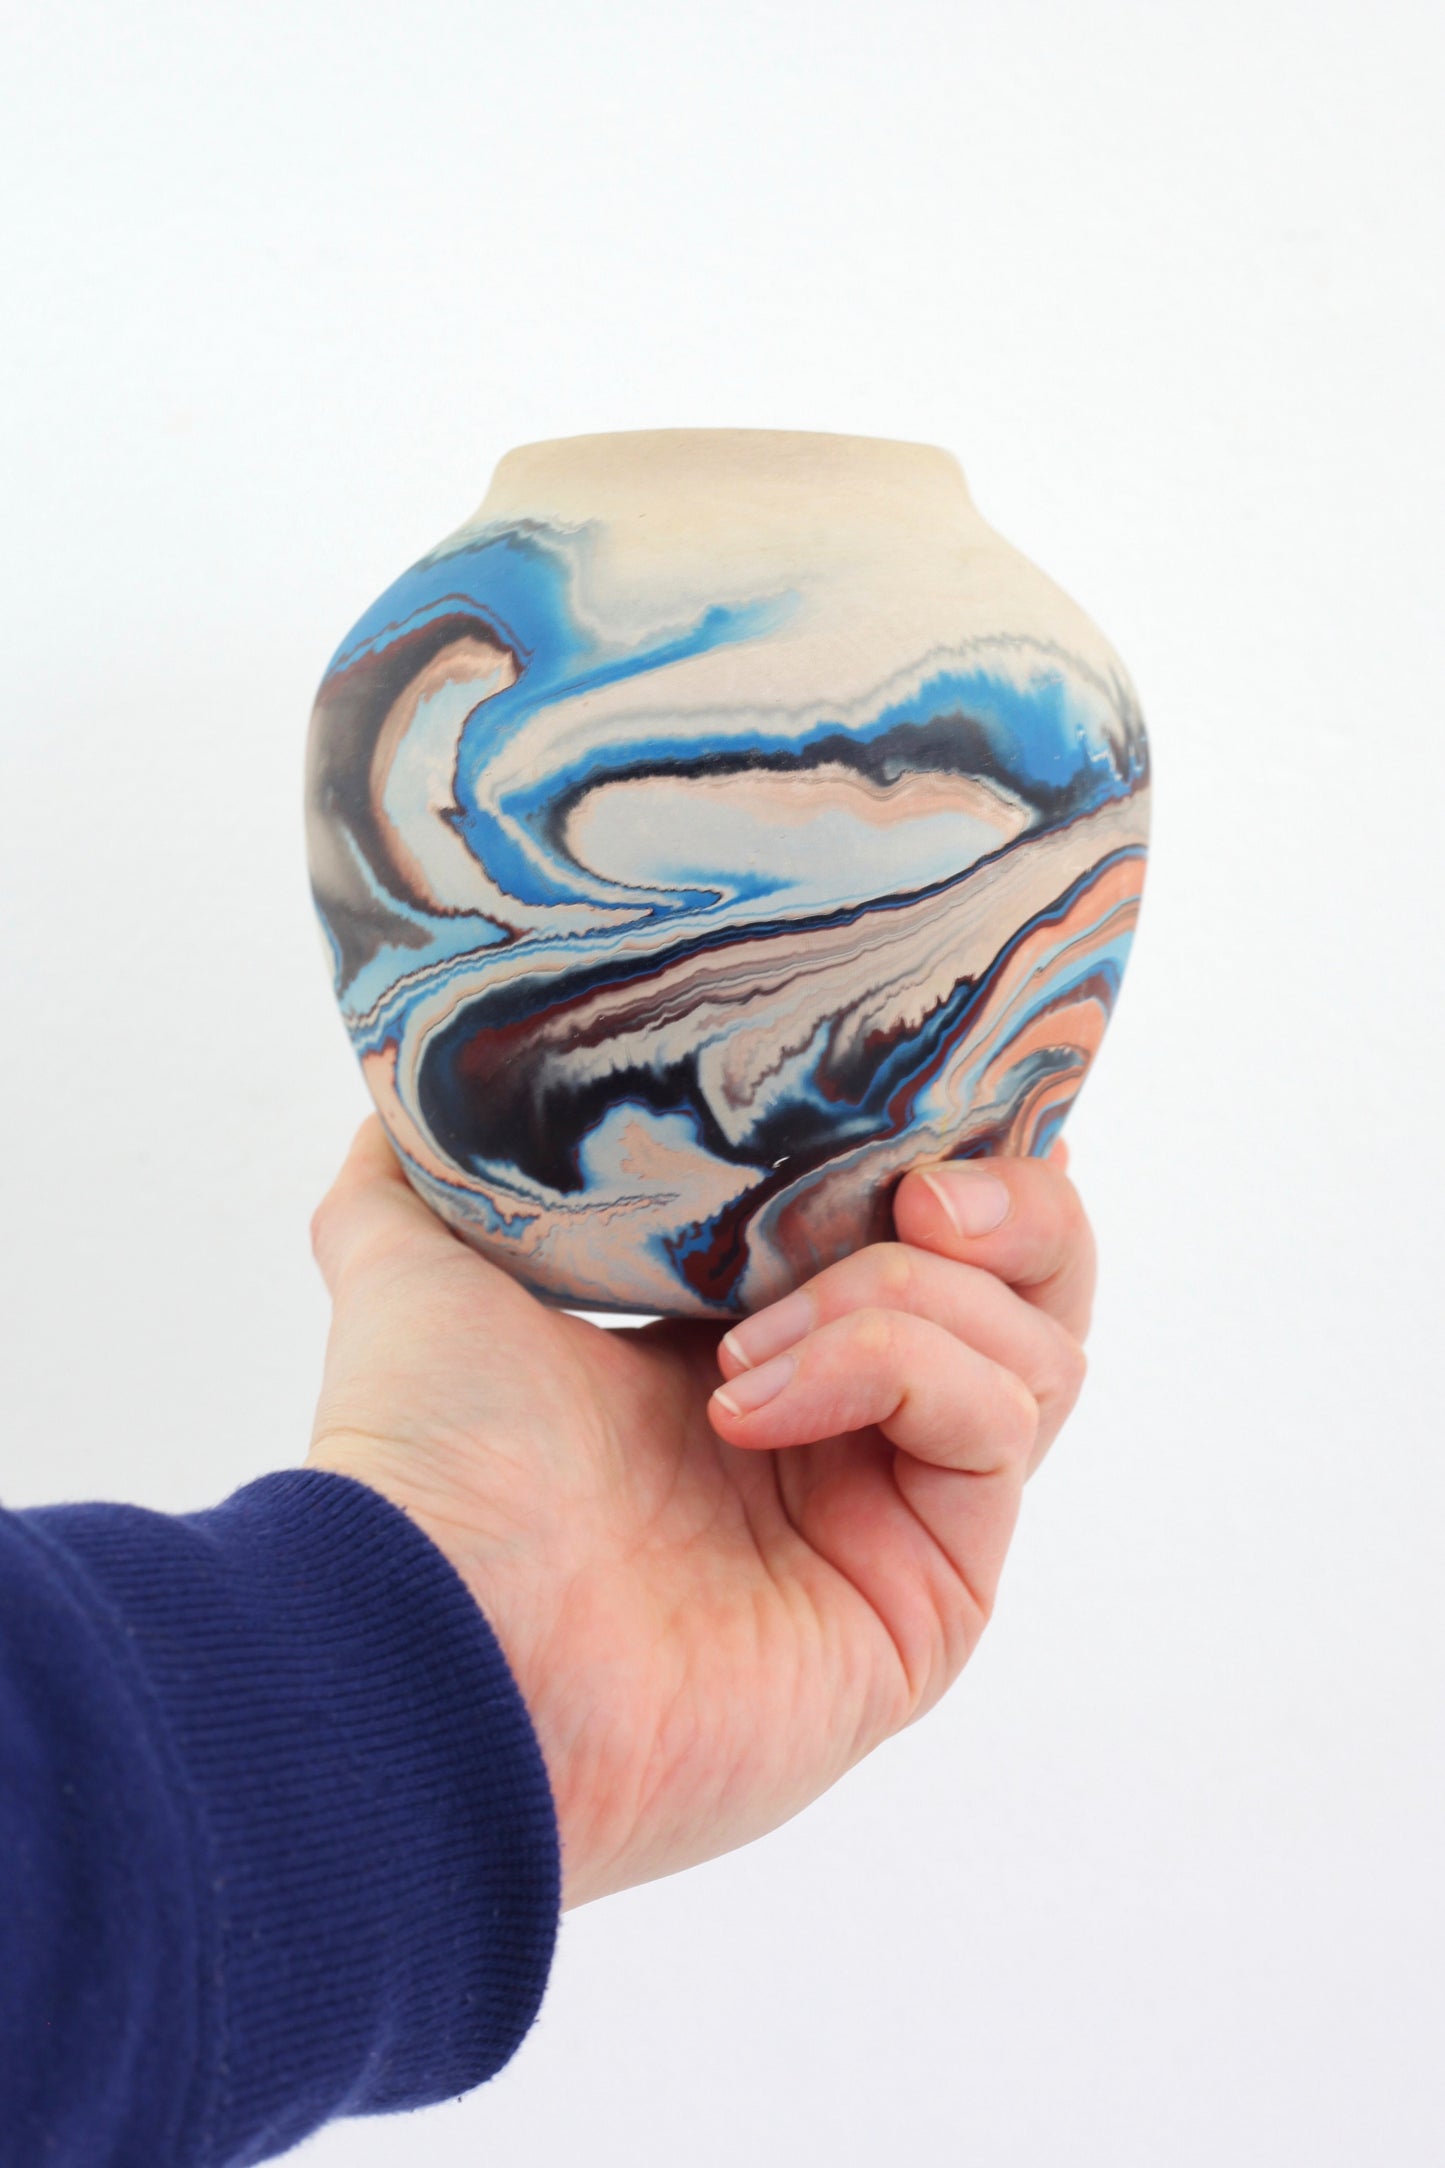 SOLD - Vintage Nemadji Pottery Vase in Blue, Oxblood, & Peach